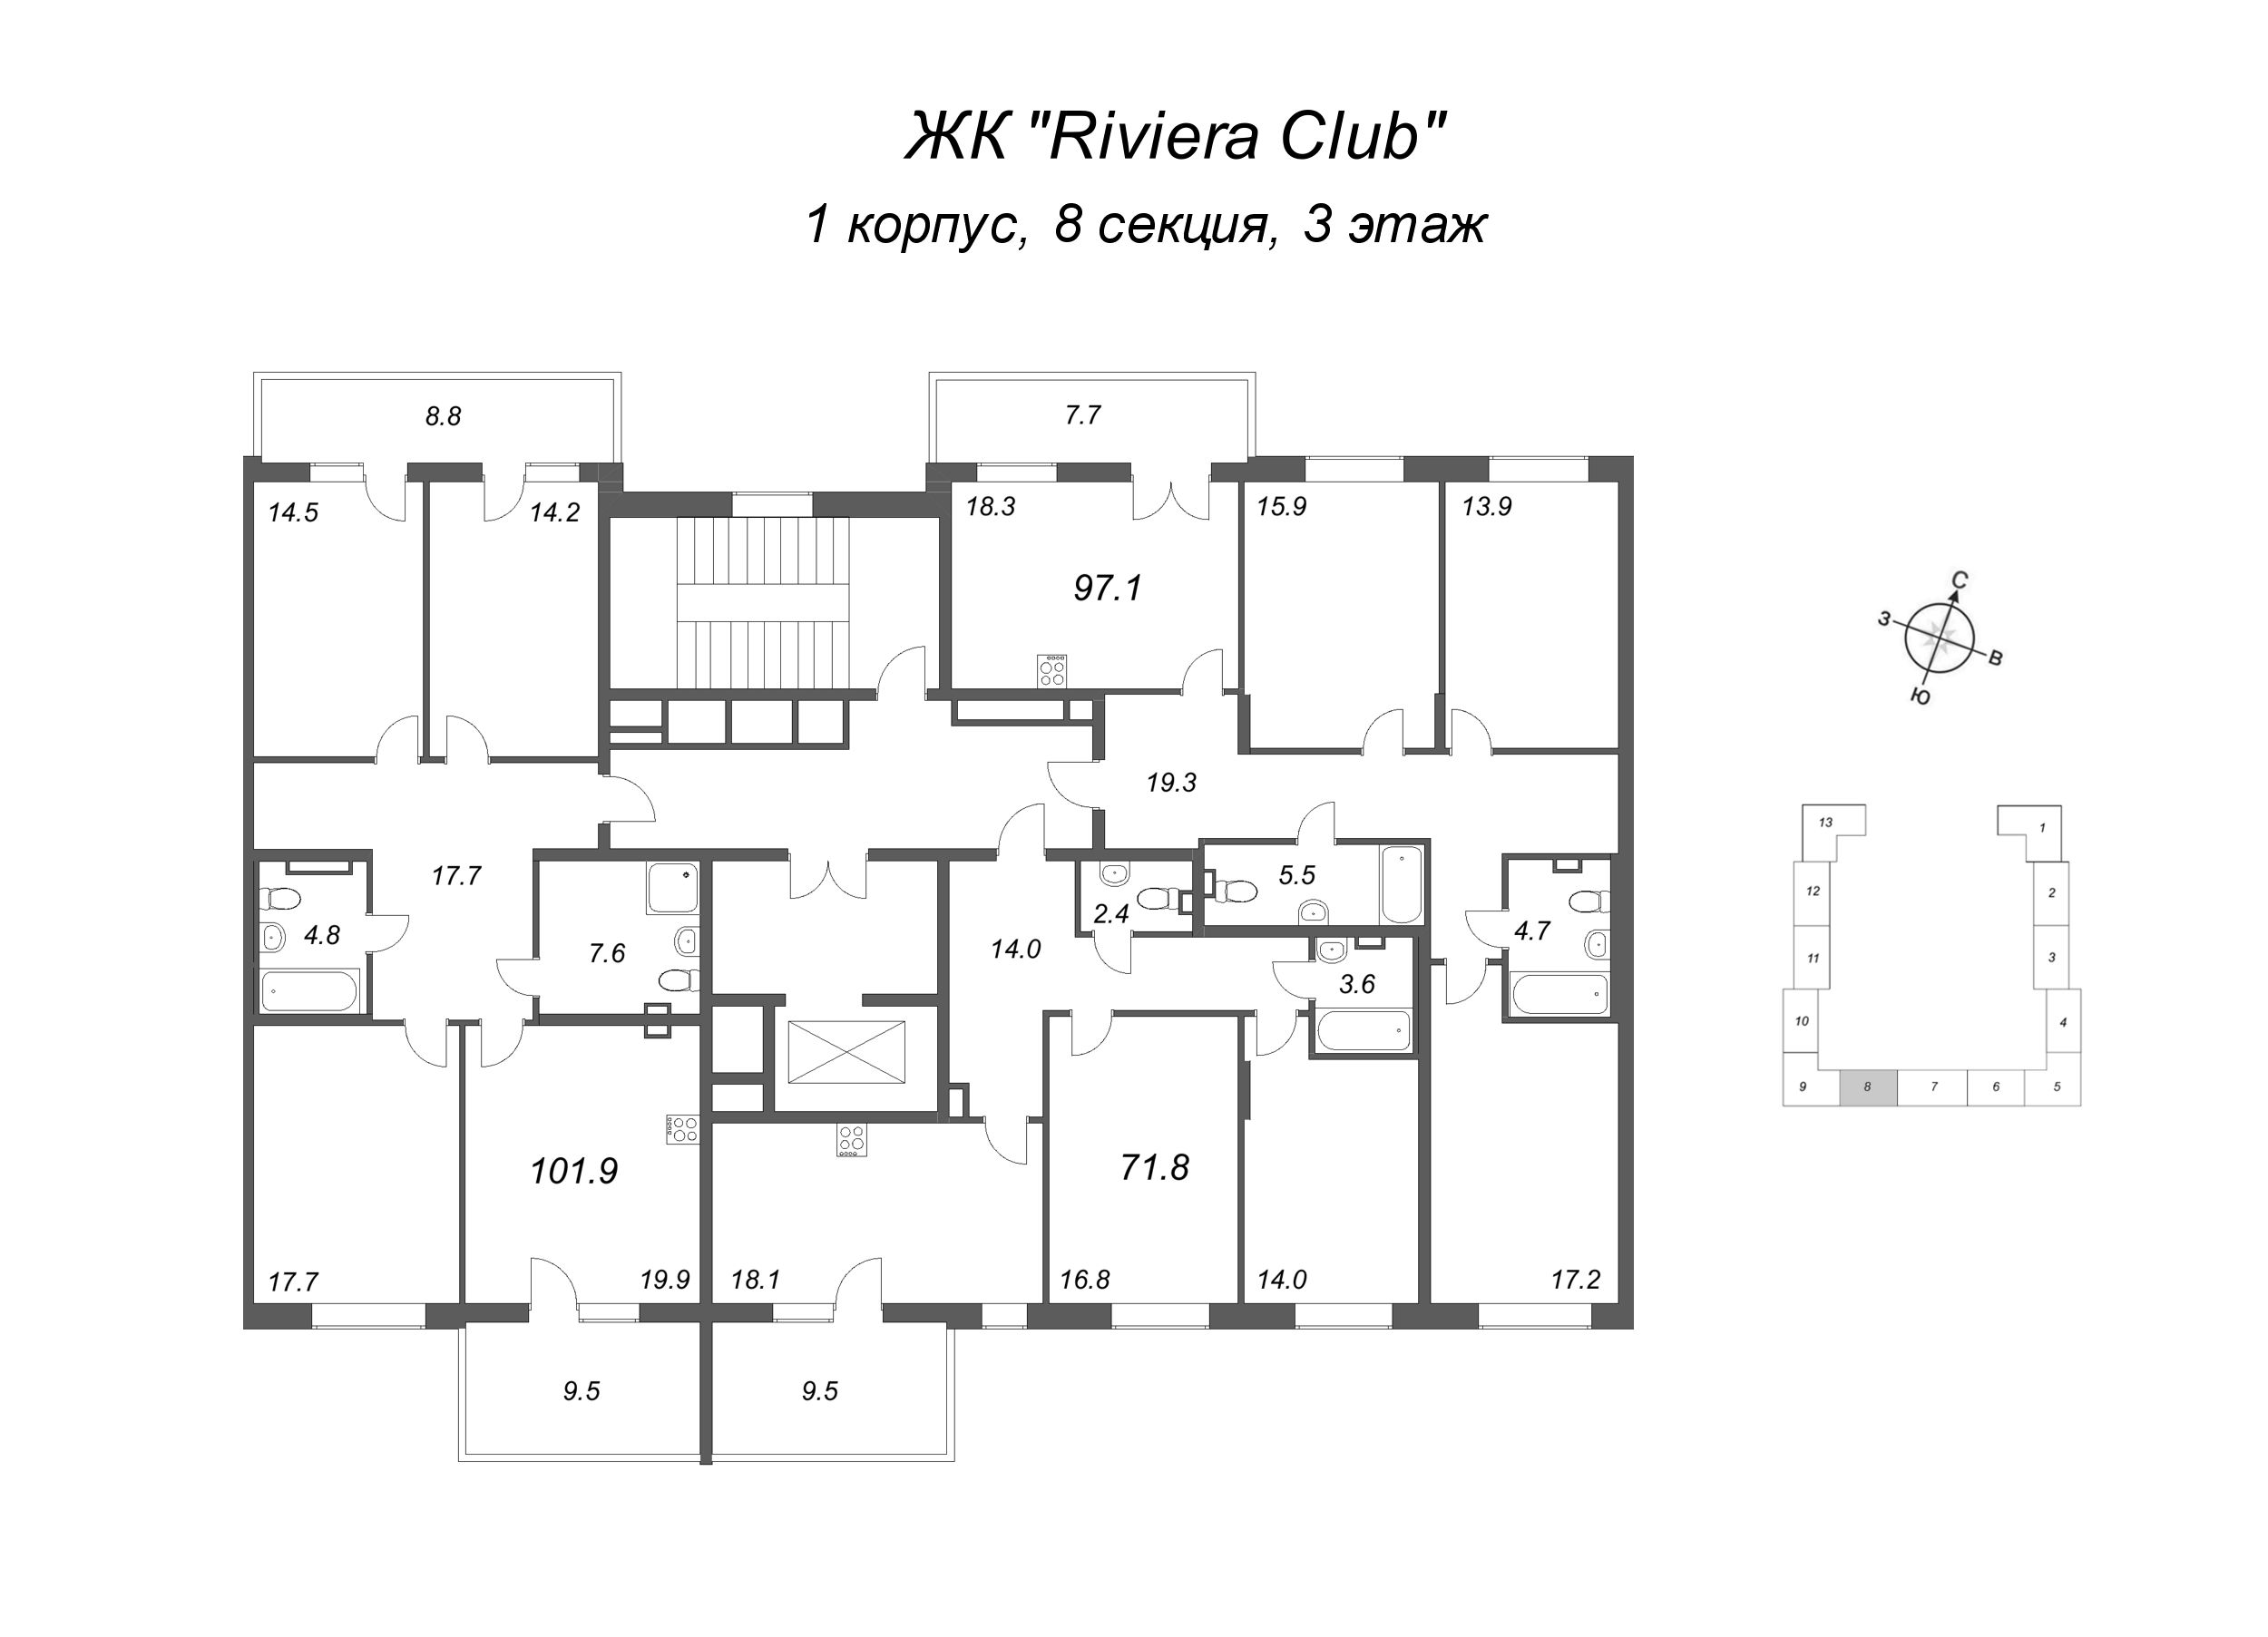 4-комнатная (Евро) квартира, 97.1 м² в ЖК "Riviera Club" - планировка этажа